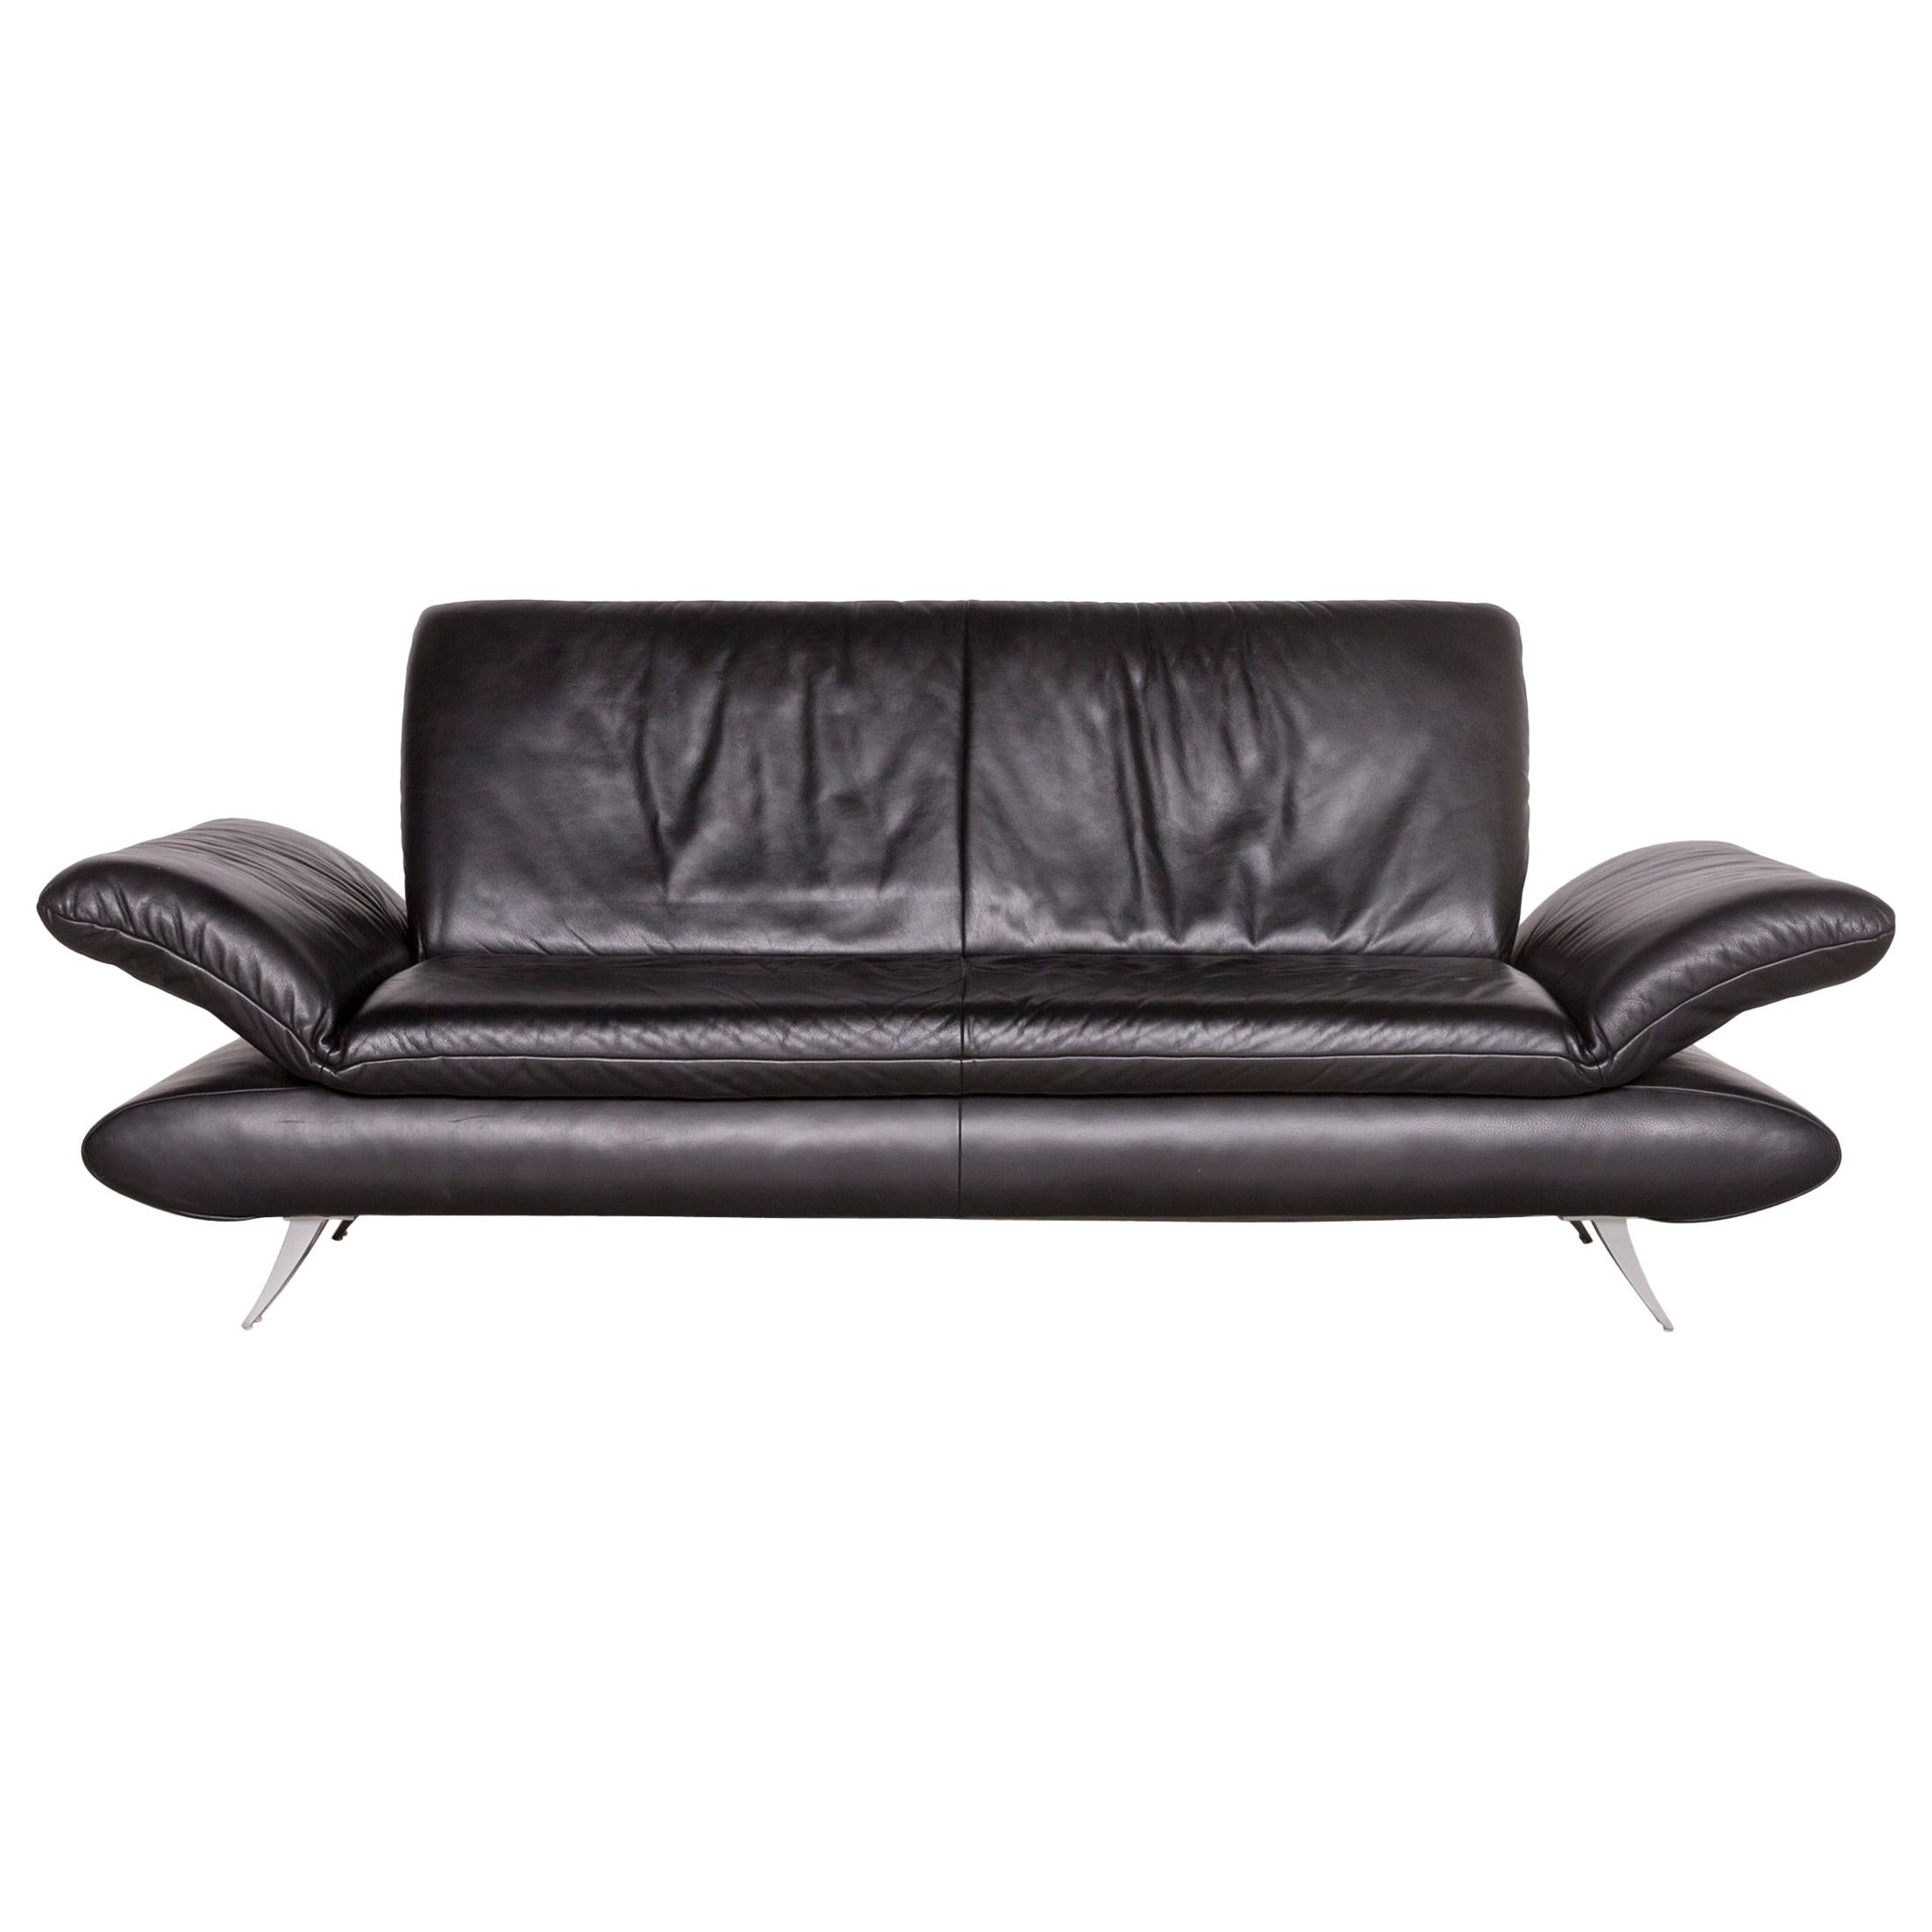 Koinor Rossini Designer Leather Sofa Black Three-Seat Couch For Sale